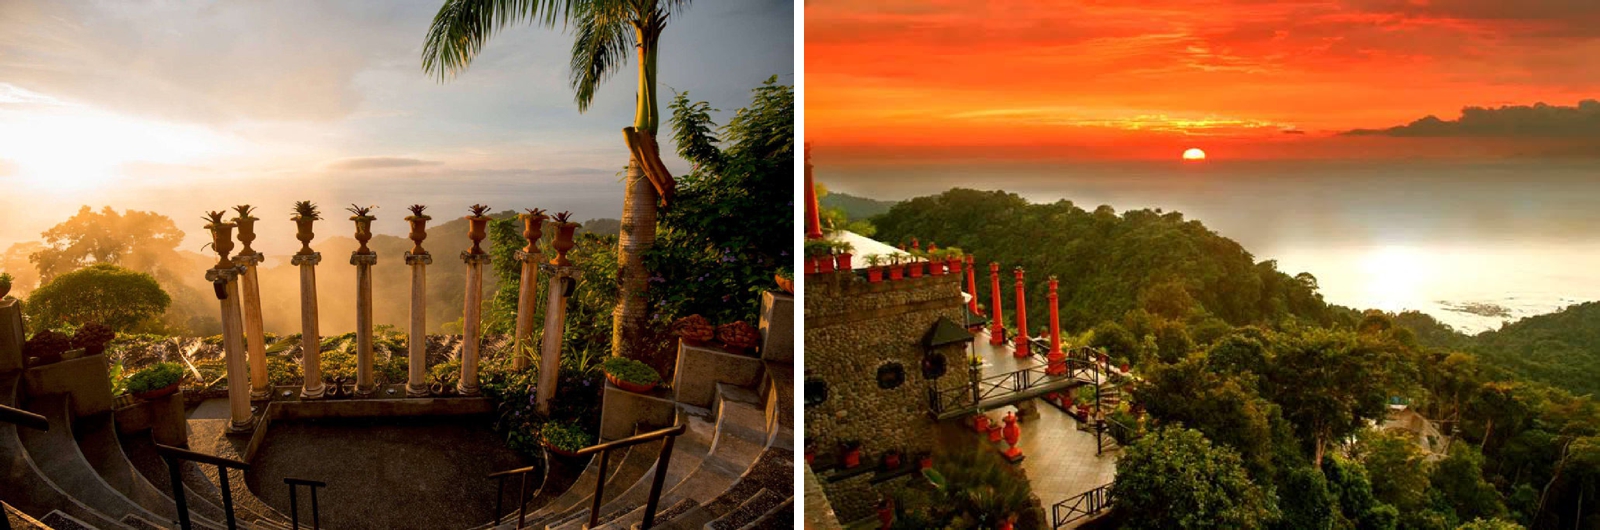 Zephry Palace, Costa Rica honeymoon 